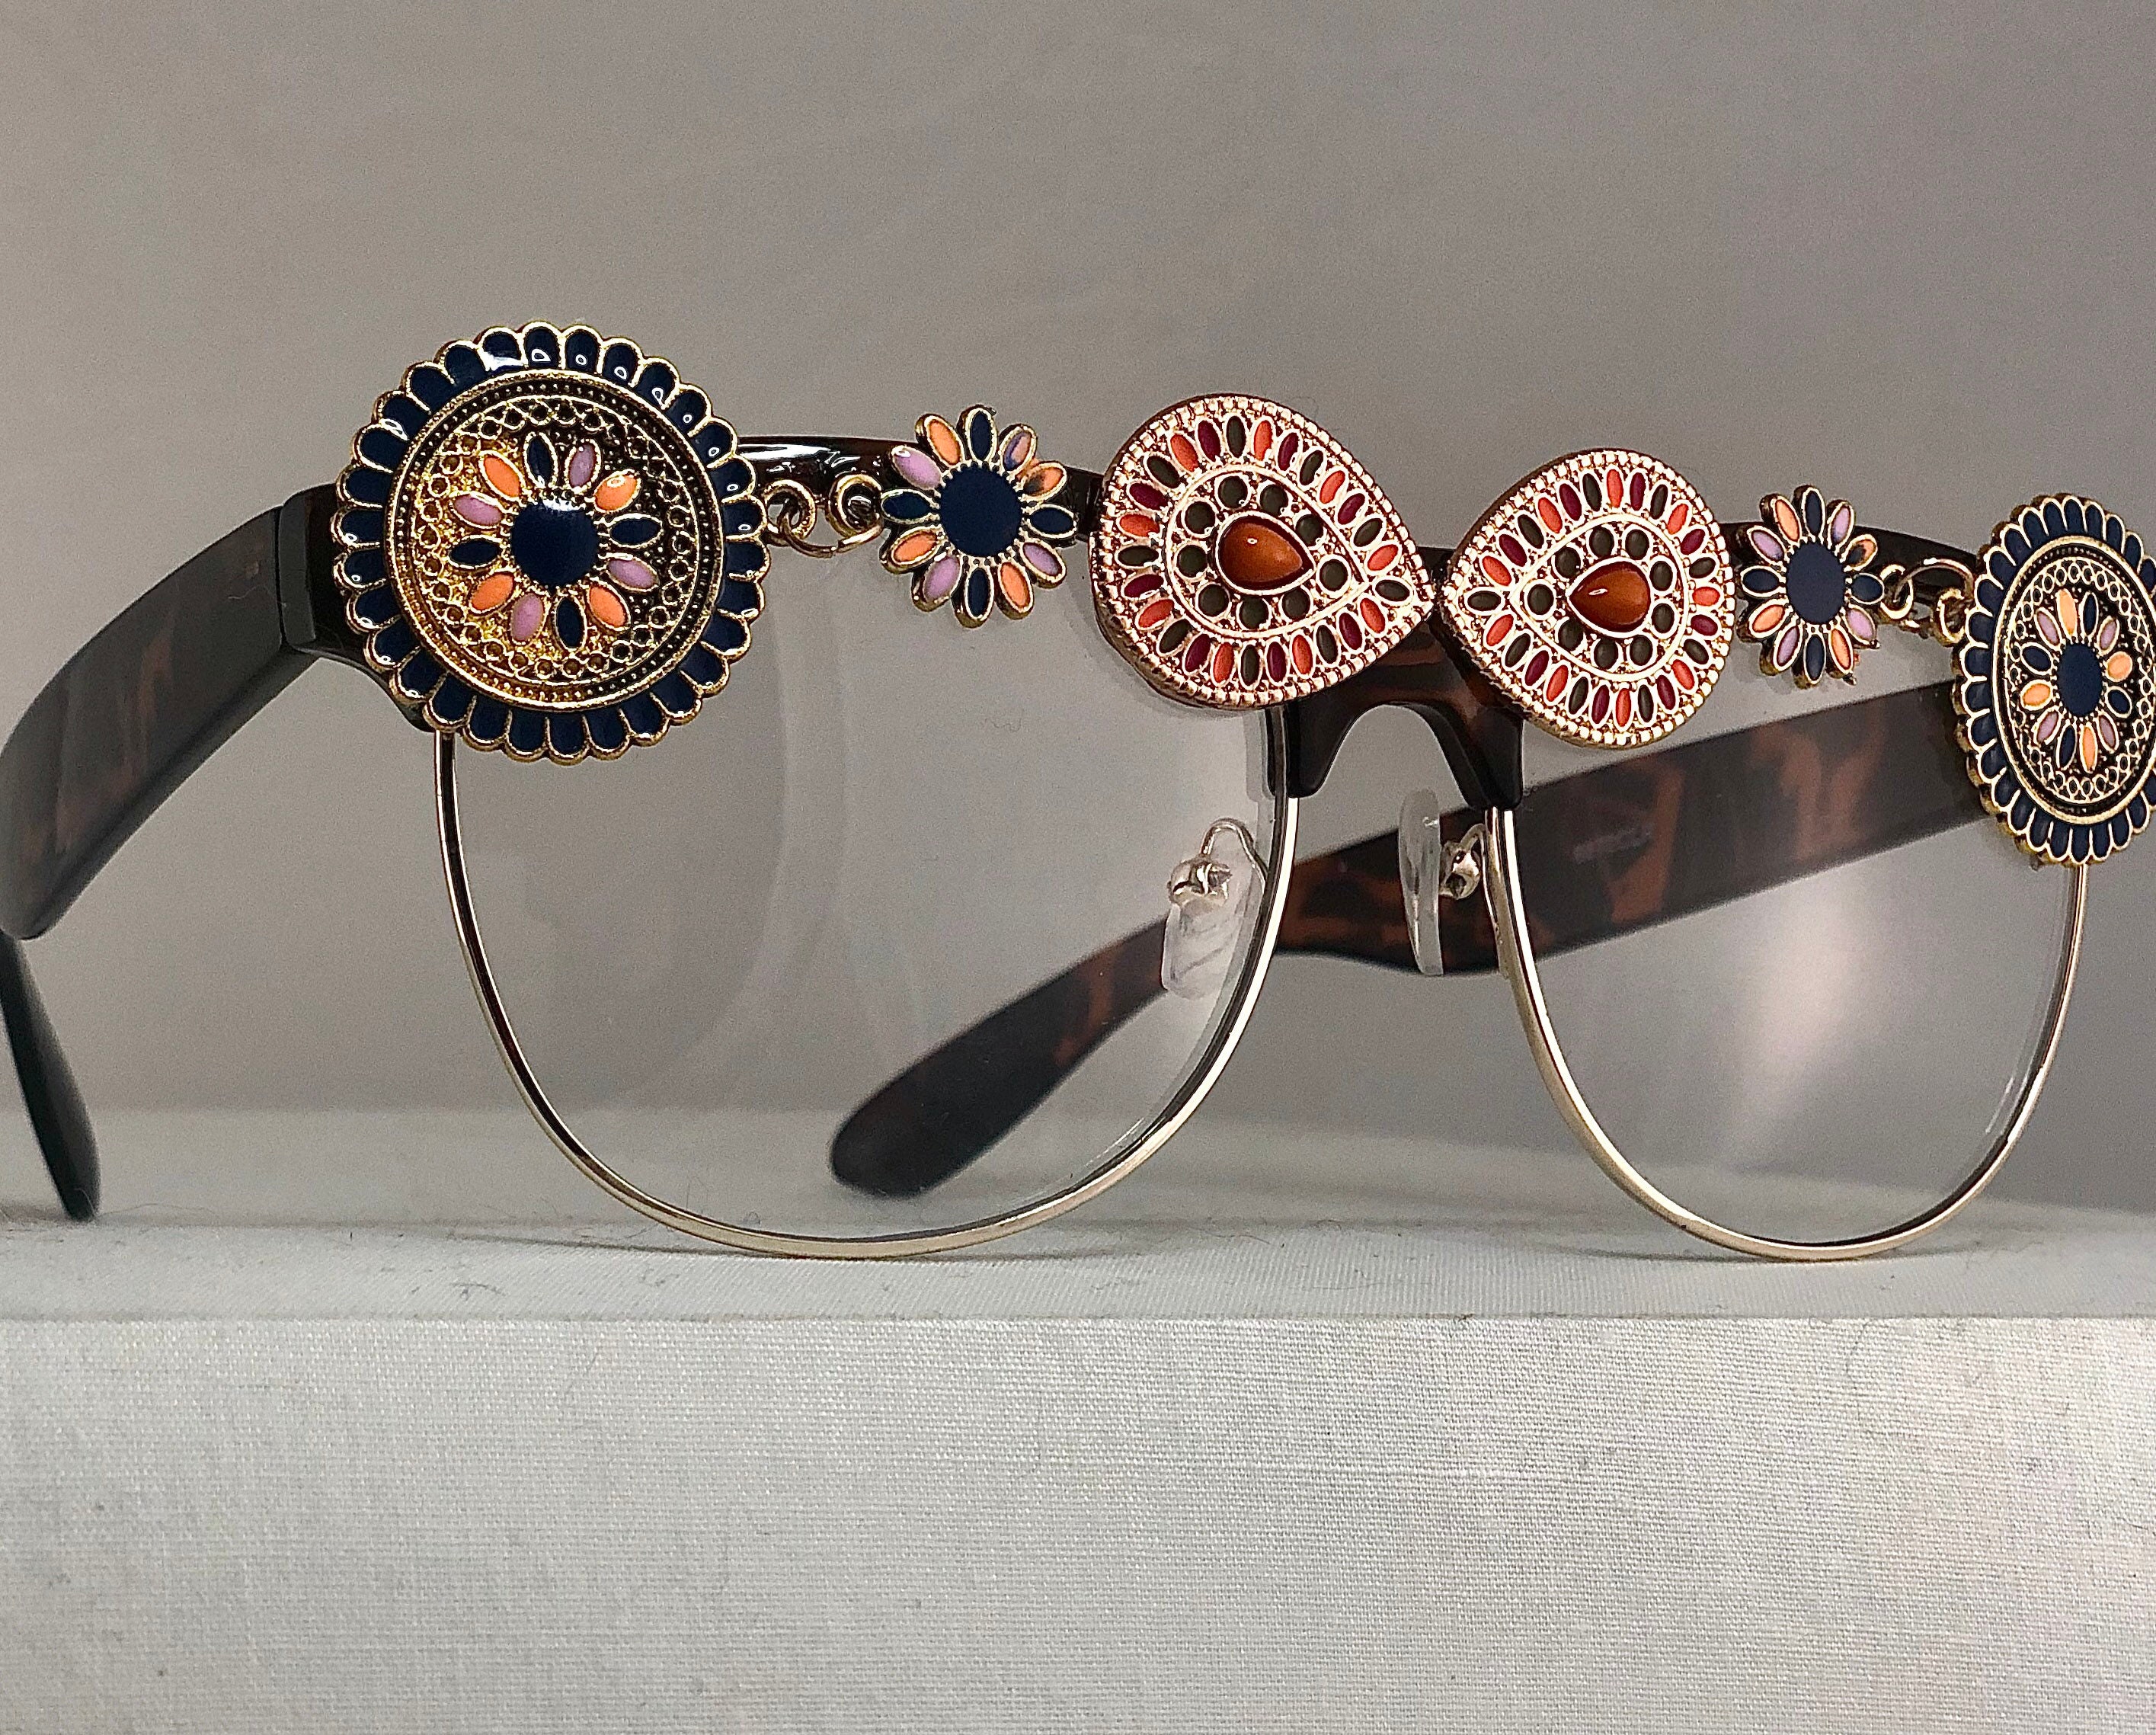 Pride Iconic Monogram Cat Eye Sunglasses